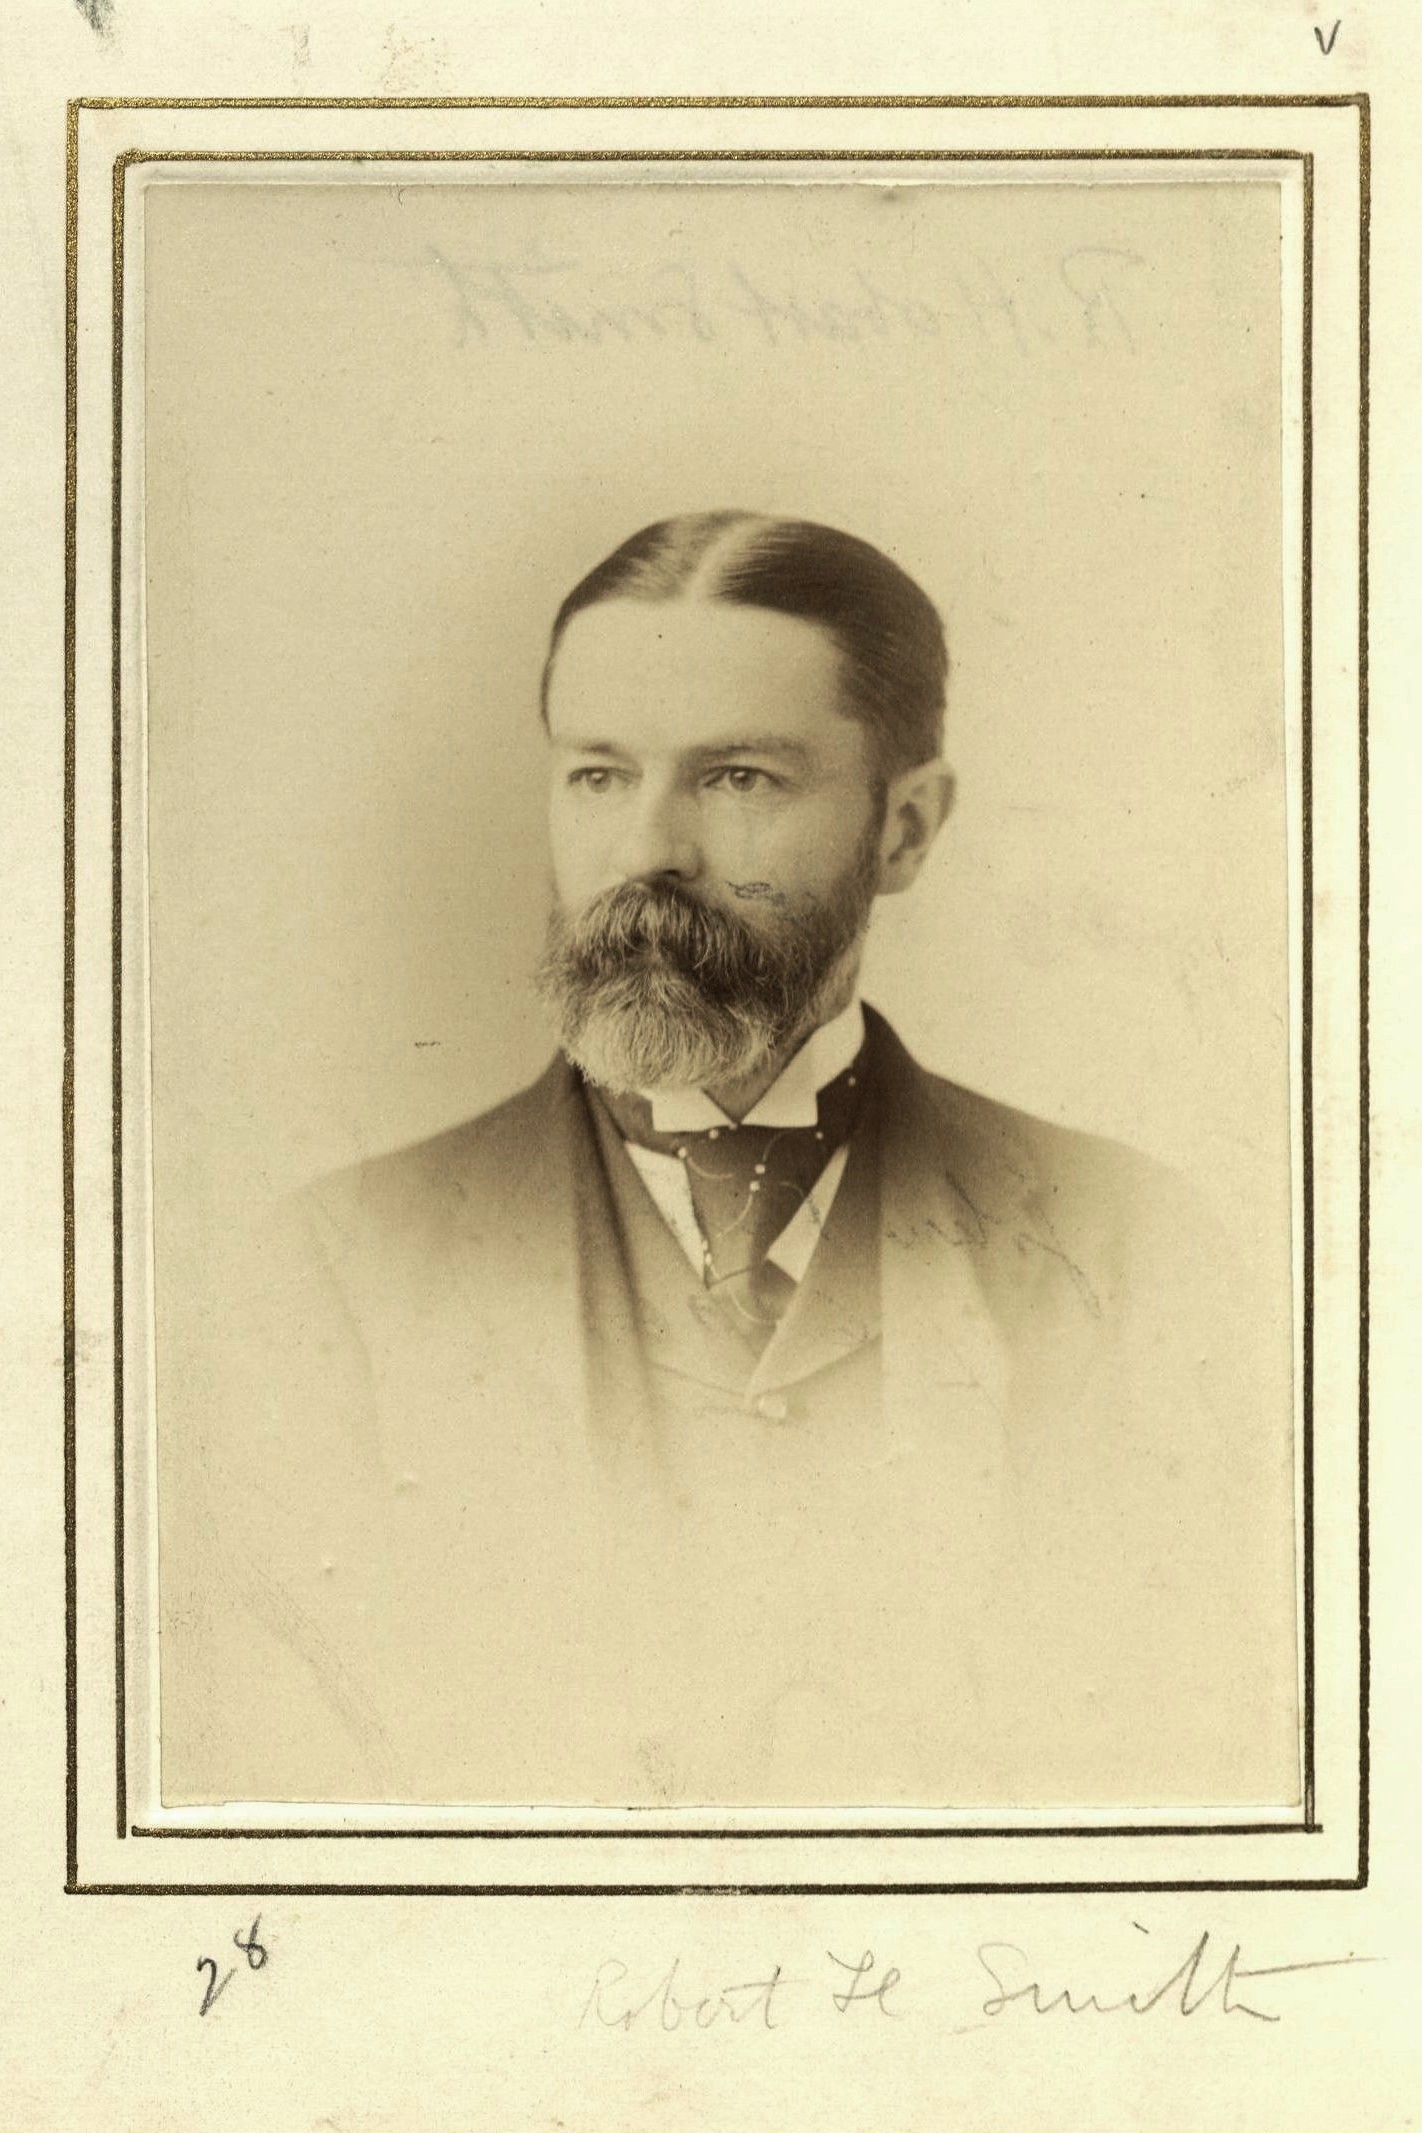 Member portrait of R. Hobart Smith